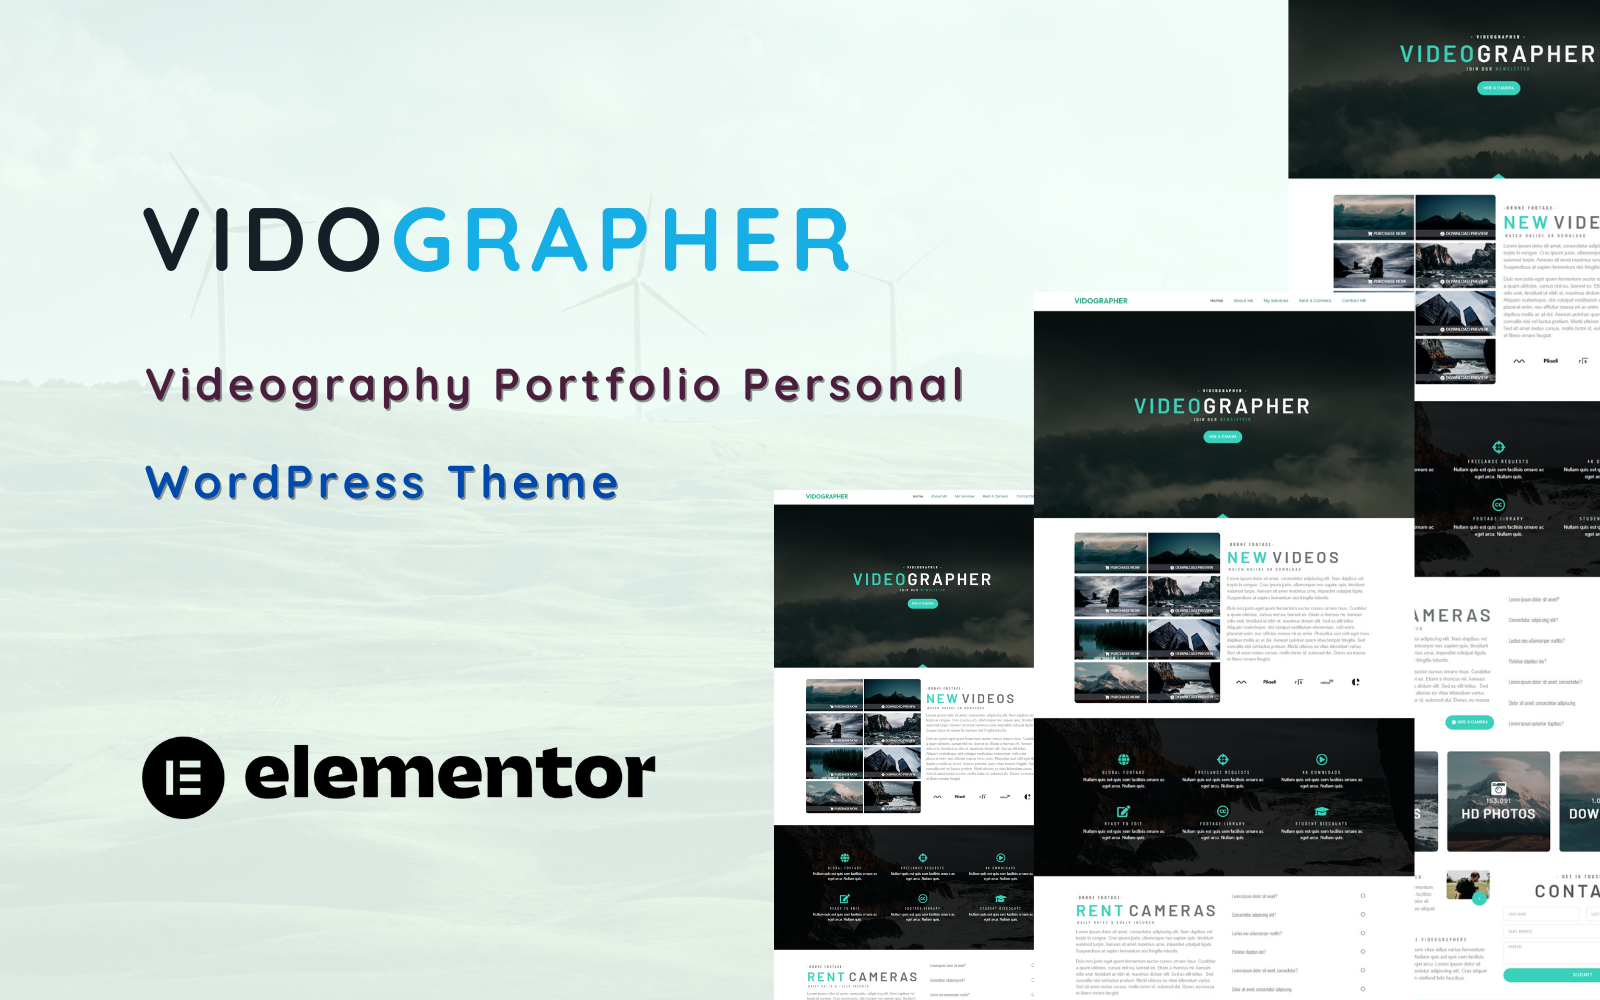 Vidographer - Videography Portfolio Personal One Page WordPress Theme